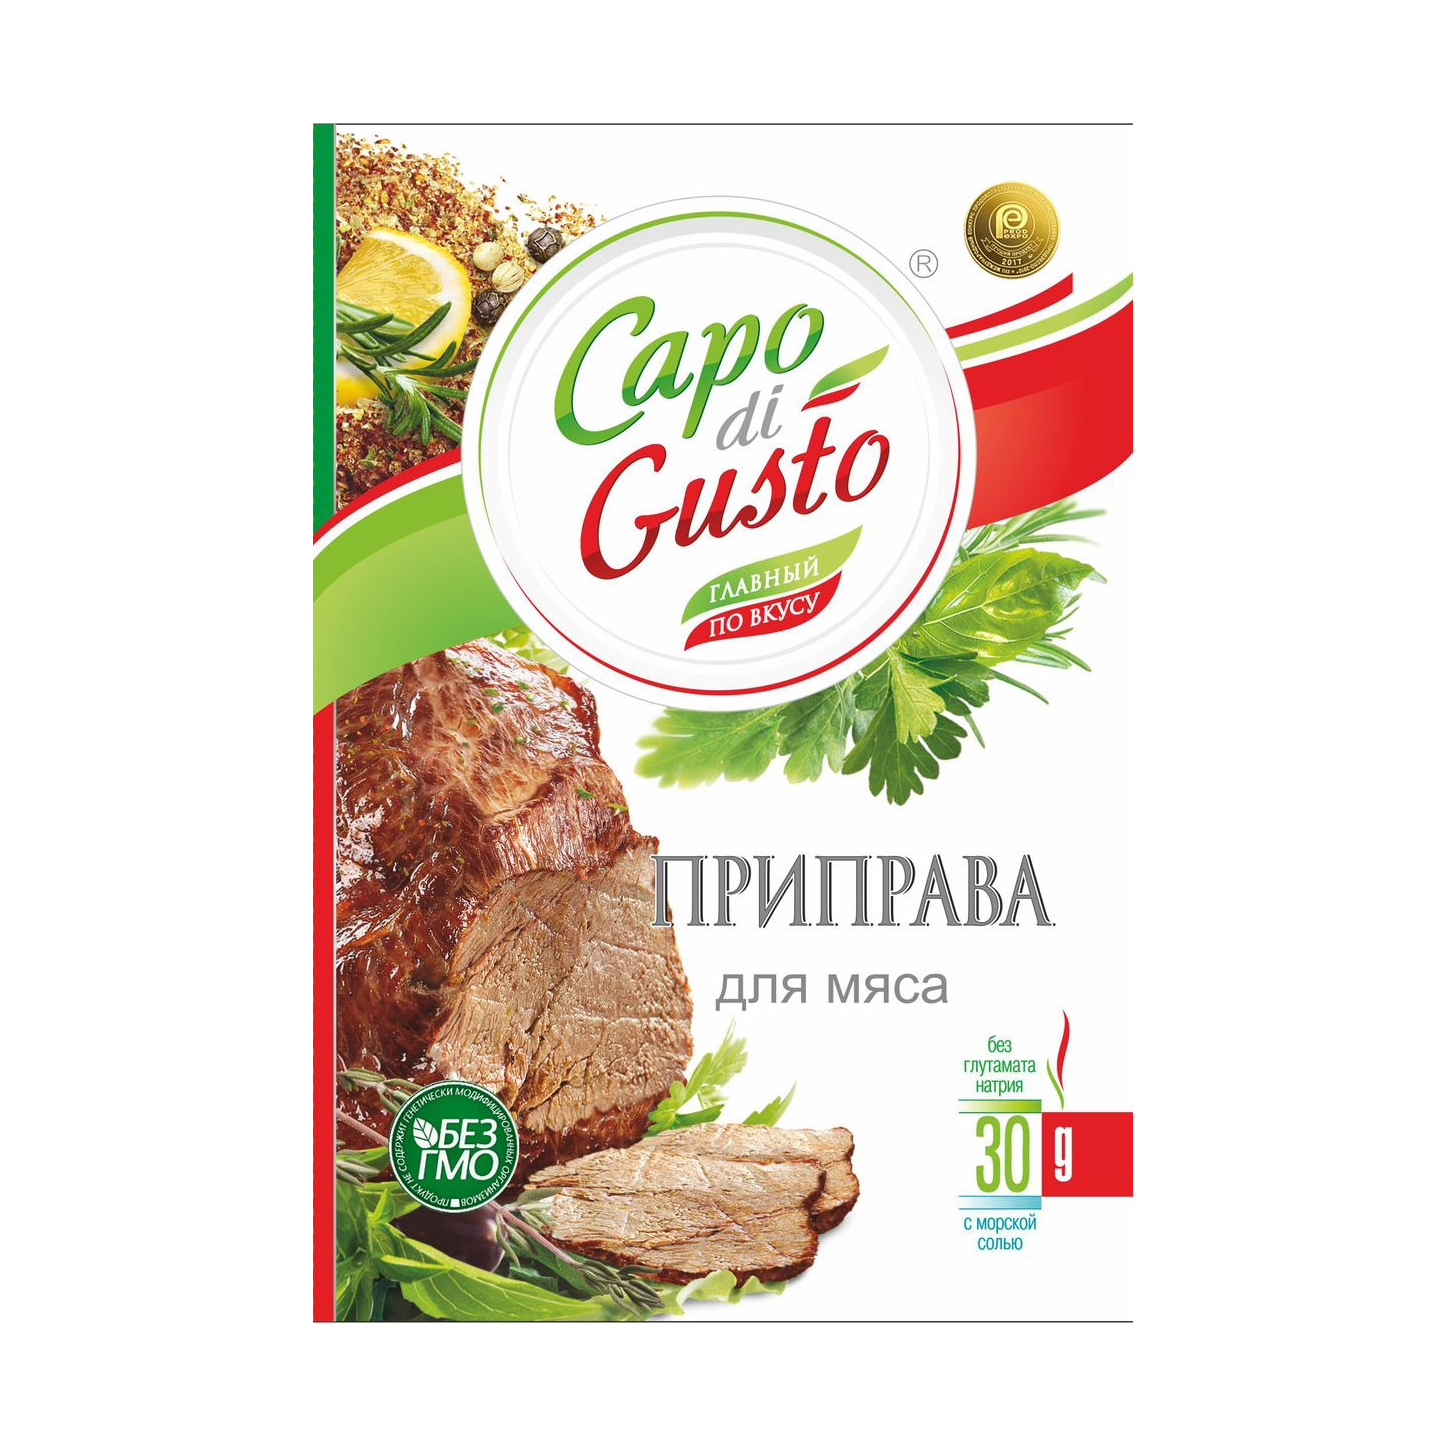 Приправа Capo di Gusto для мяса 30 г приправа приправка смесь перцев 15 г